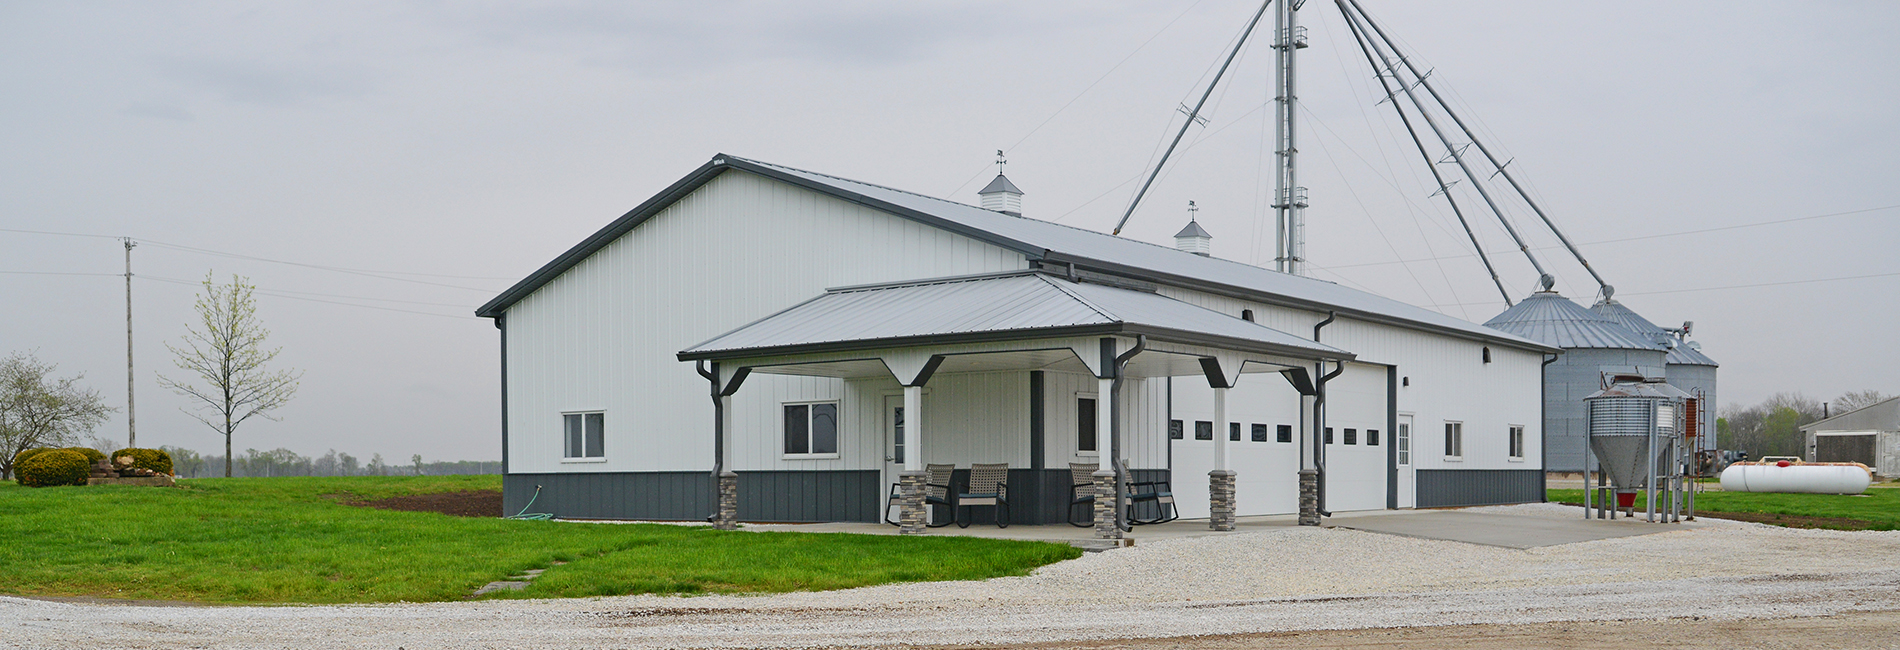 pole barn post frame agricultural building and Workshop